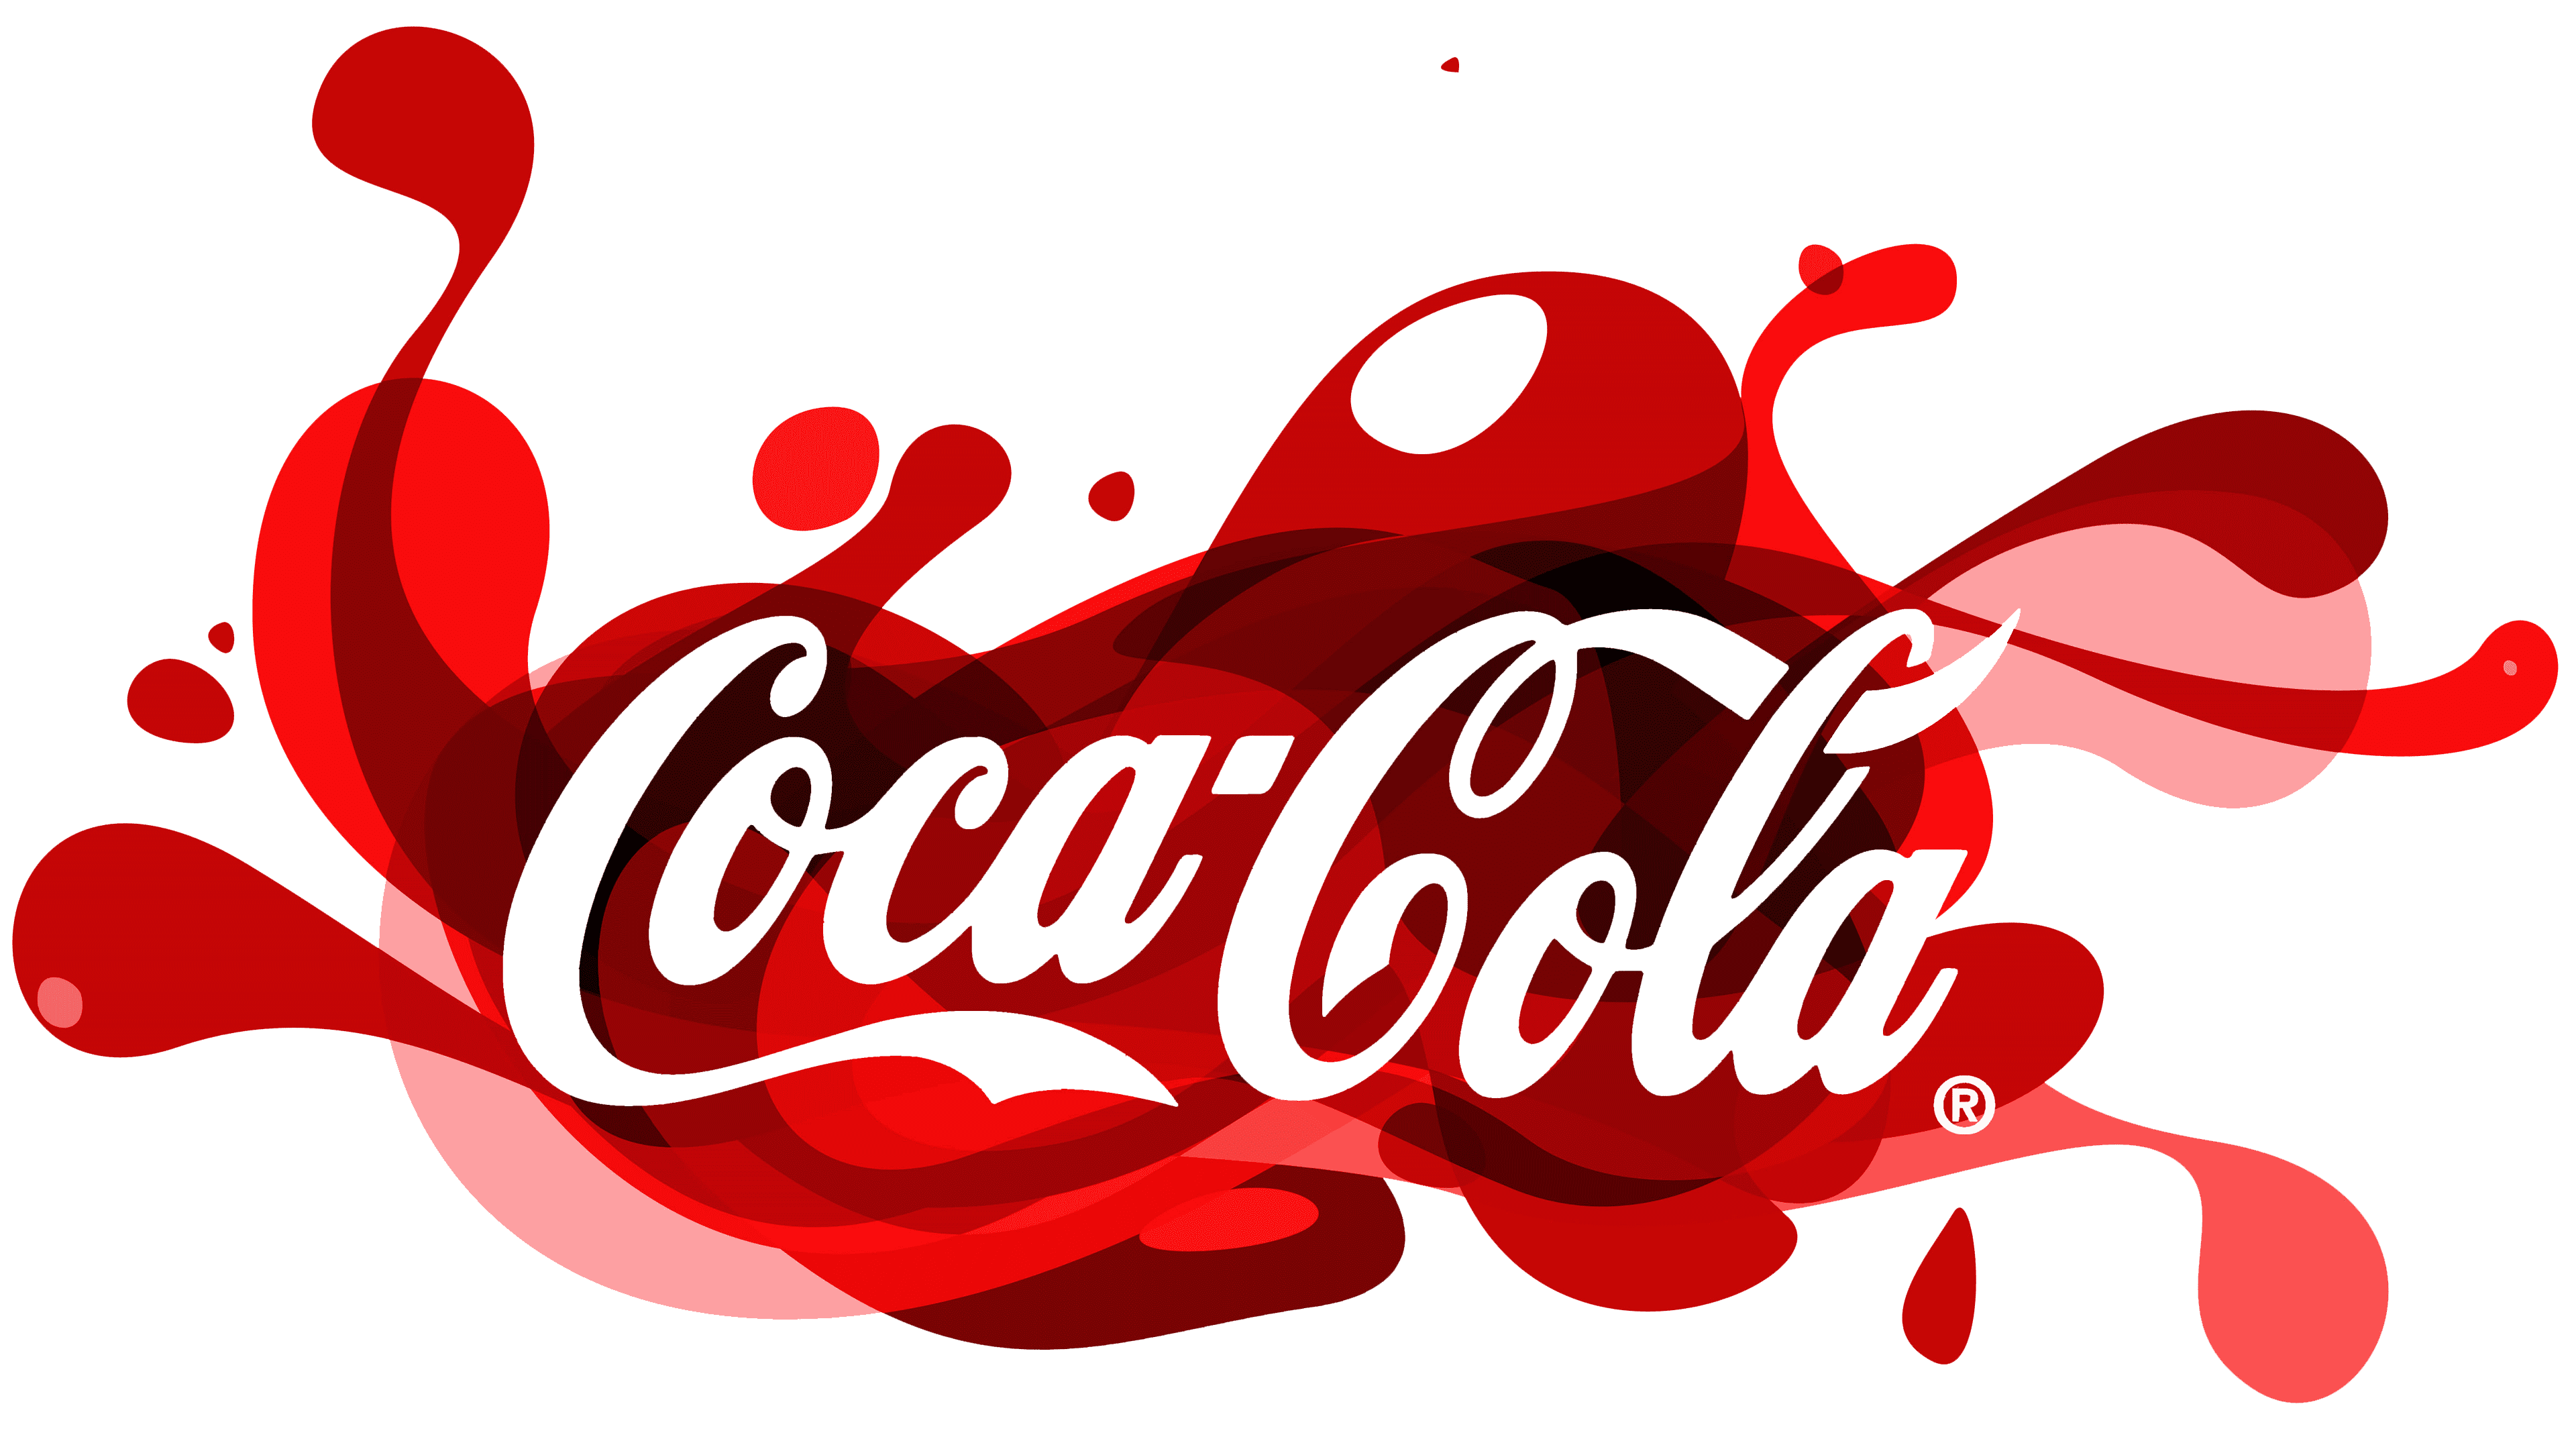 kompakt sy race Coca Cola Logo, symbol, meaning, history, PNG, brand